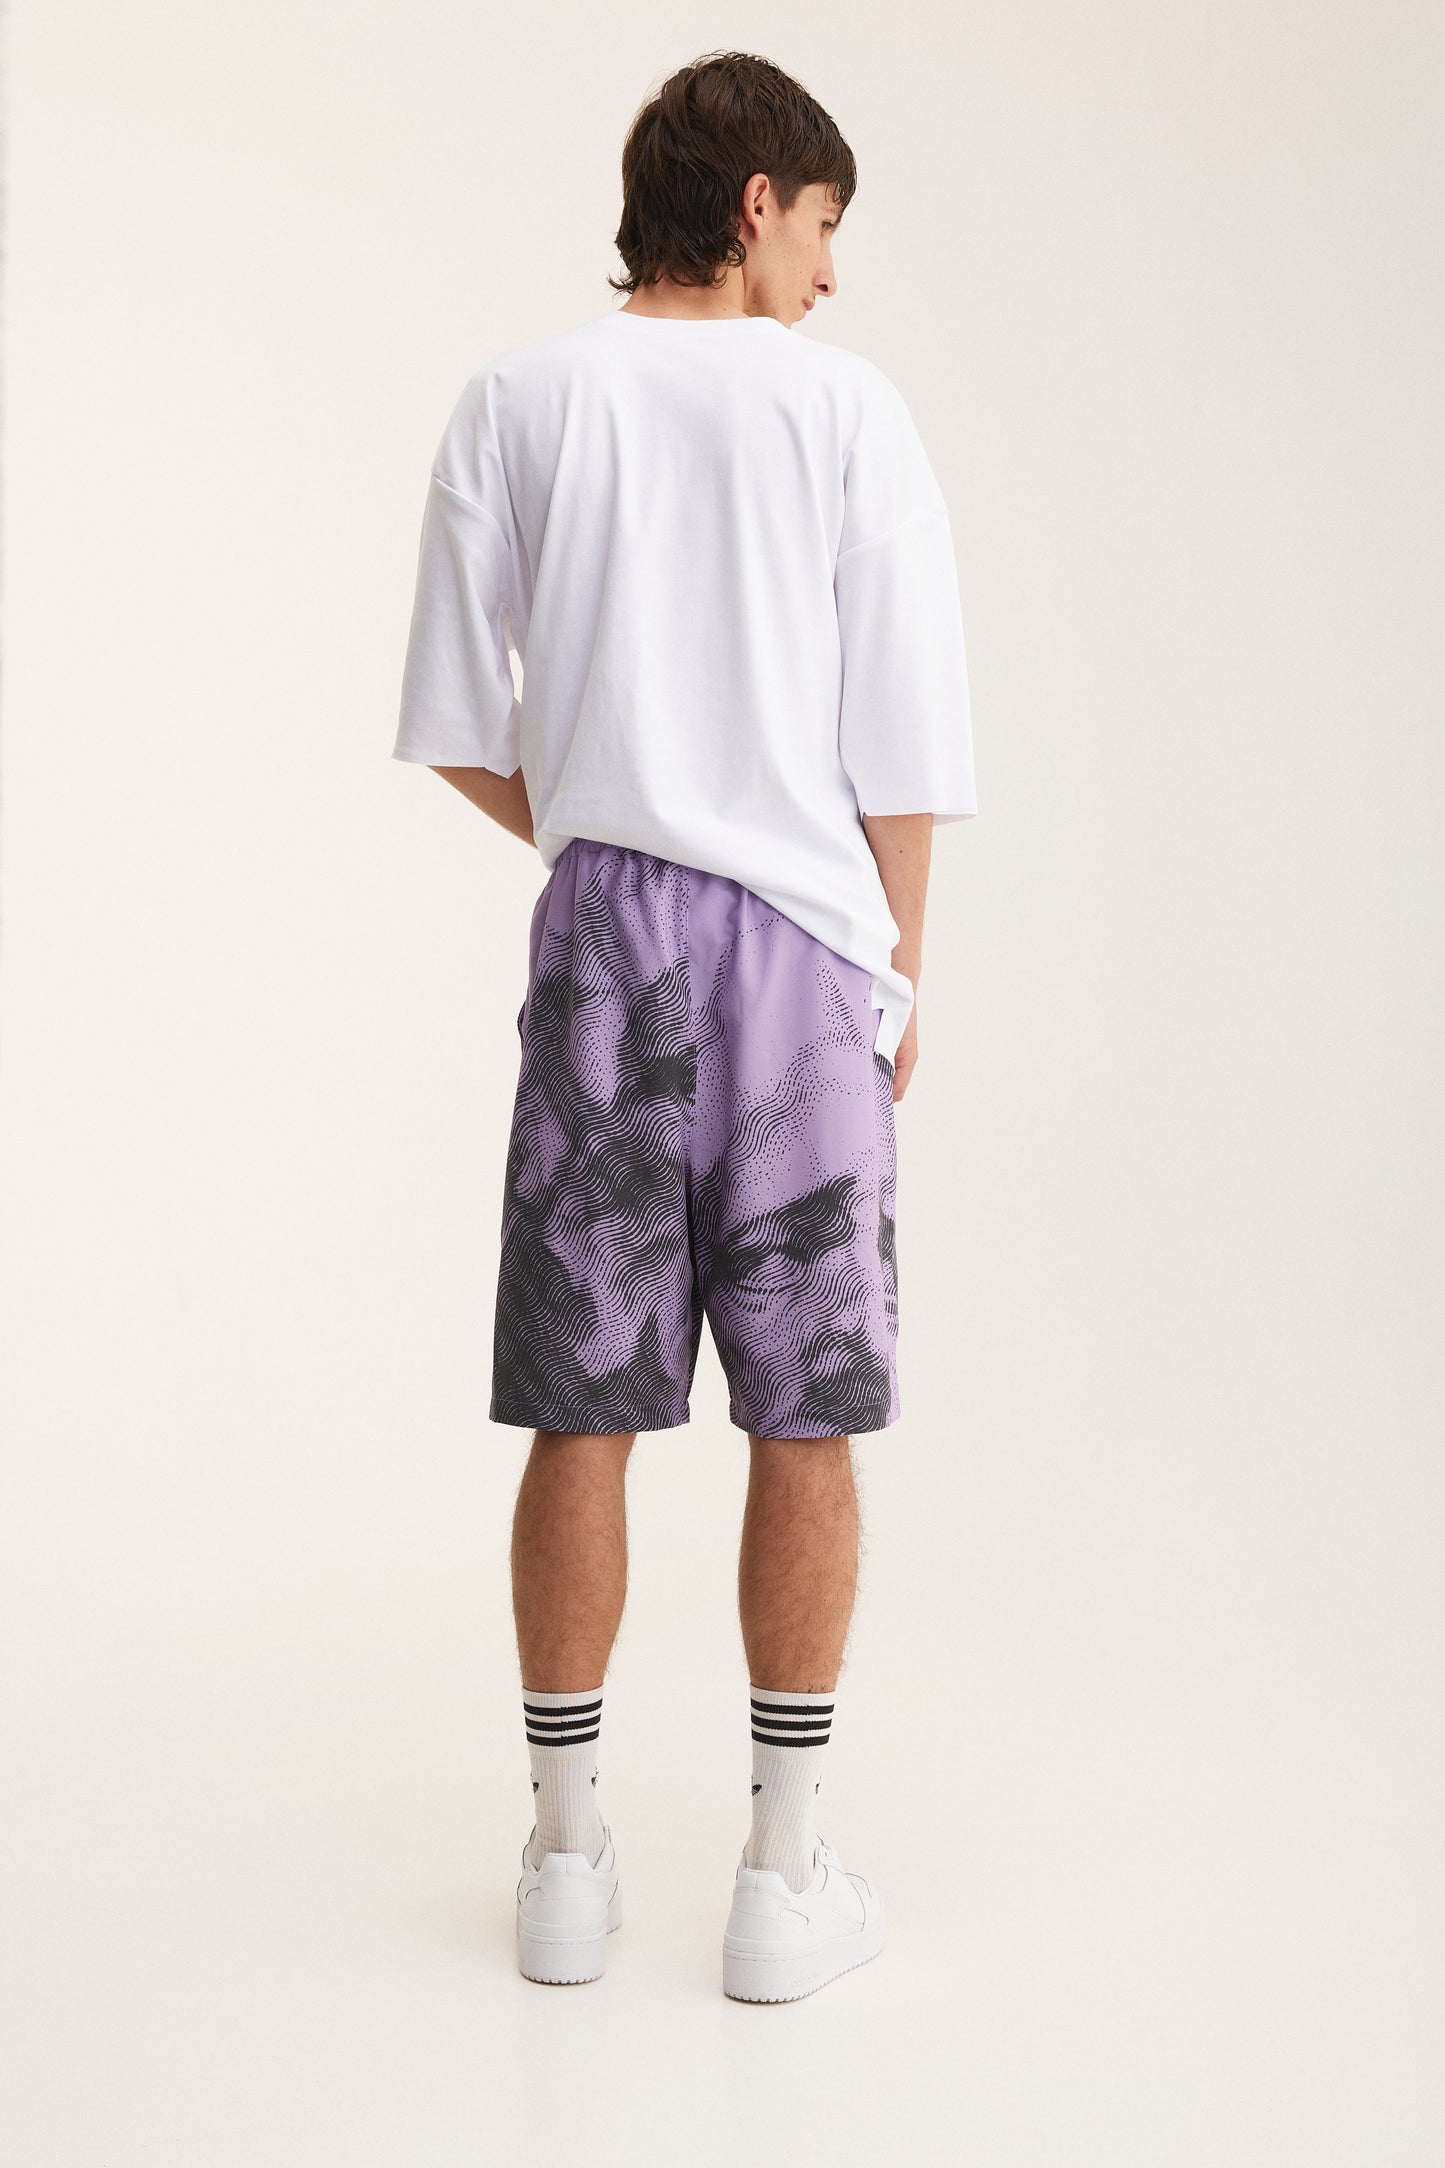 Bermuda Shorts Mauve (recycled fabric)